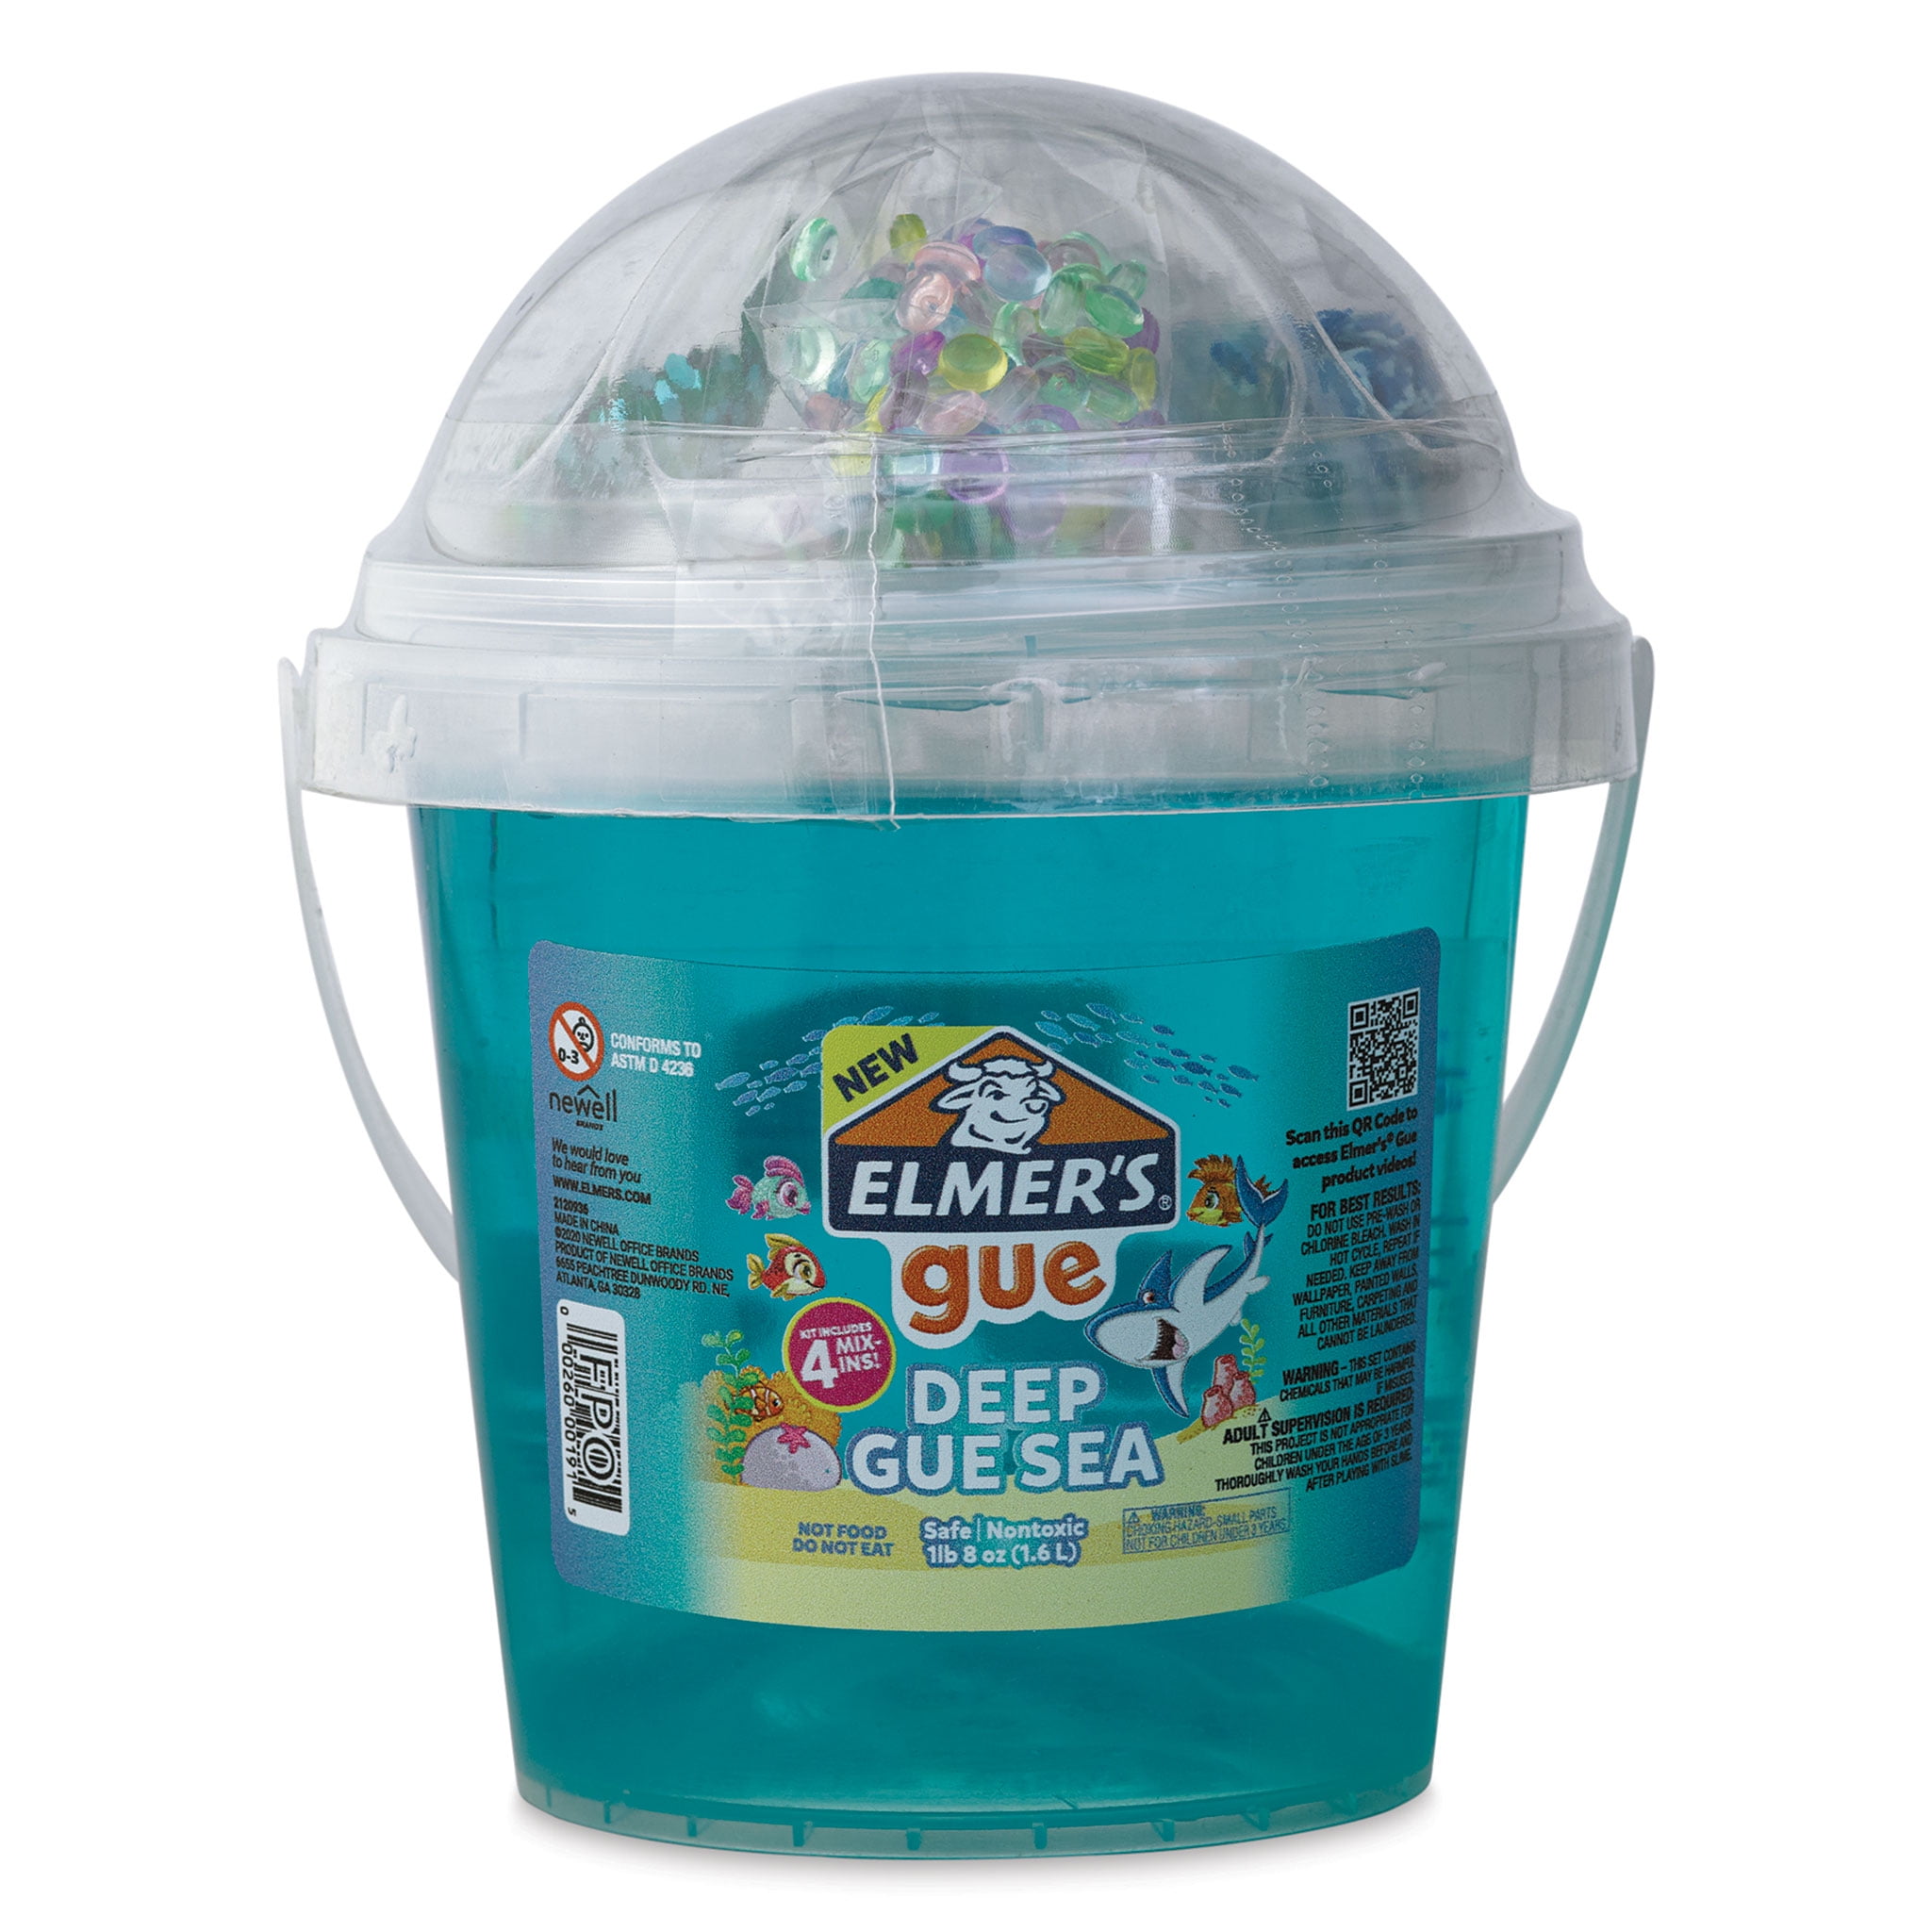 Elmer's Deep Gue Sea Slime Bucket - 1.5 lb